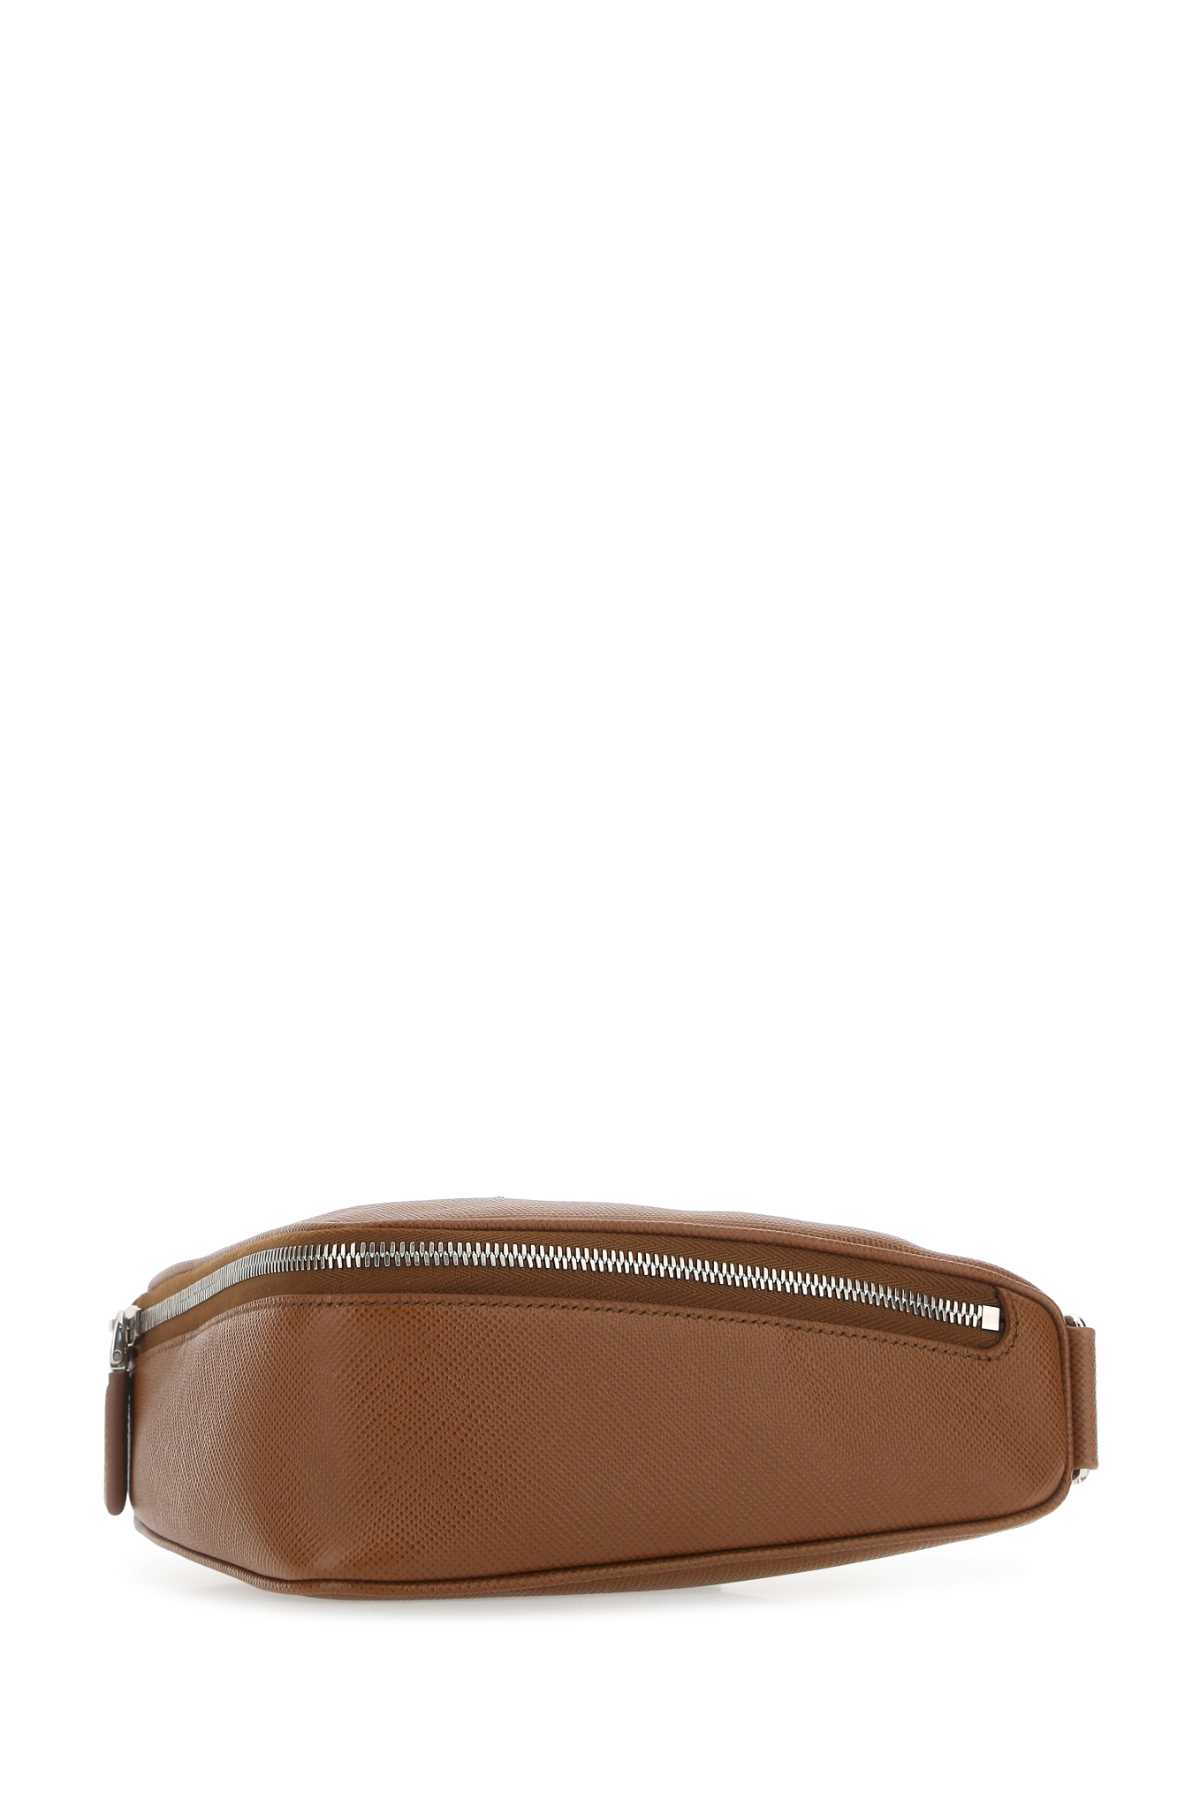 Prada Brown Leather Belt Bag In F0046